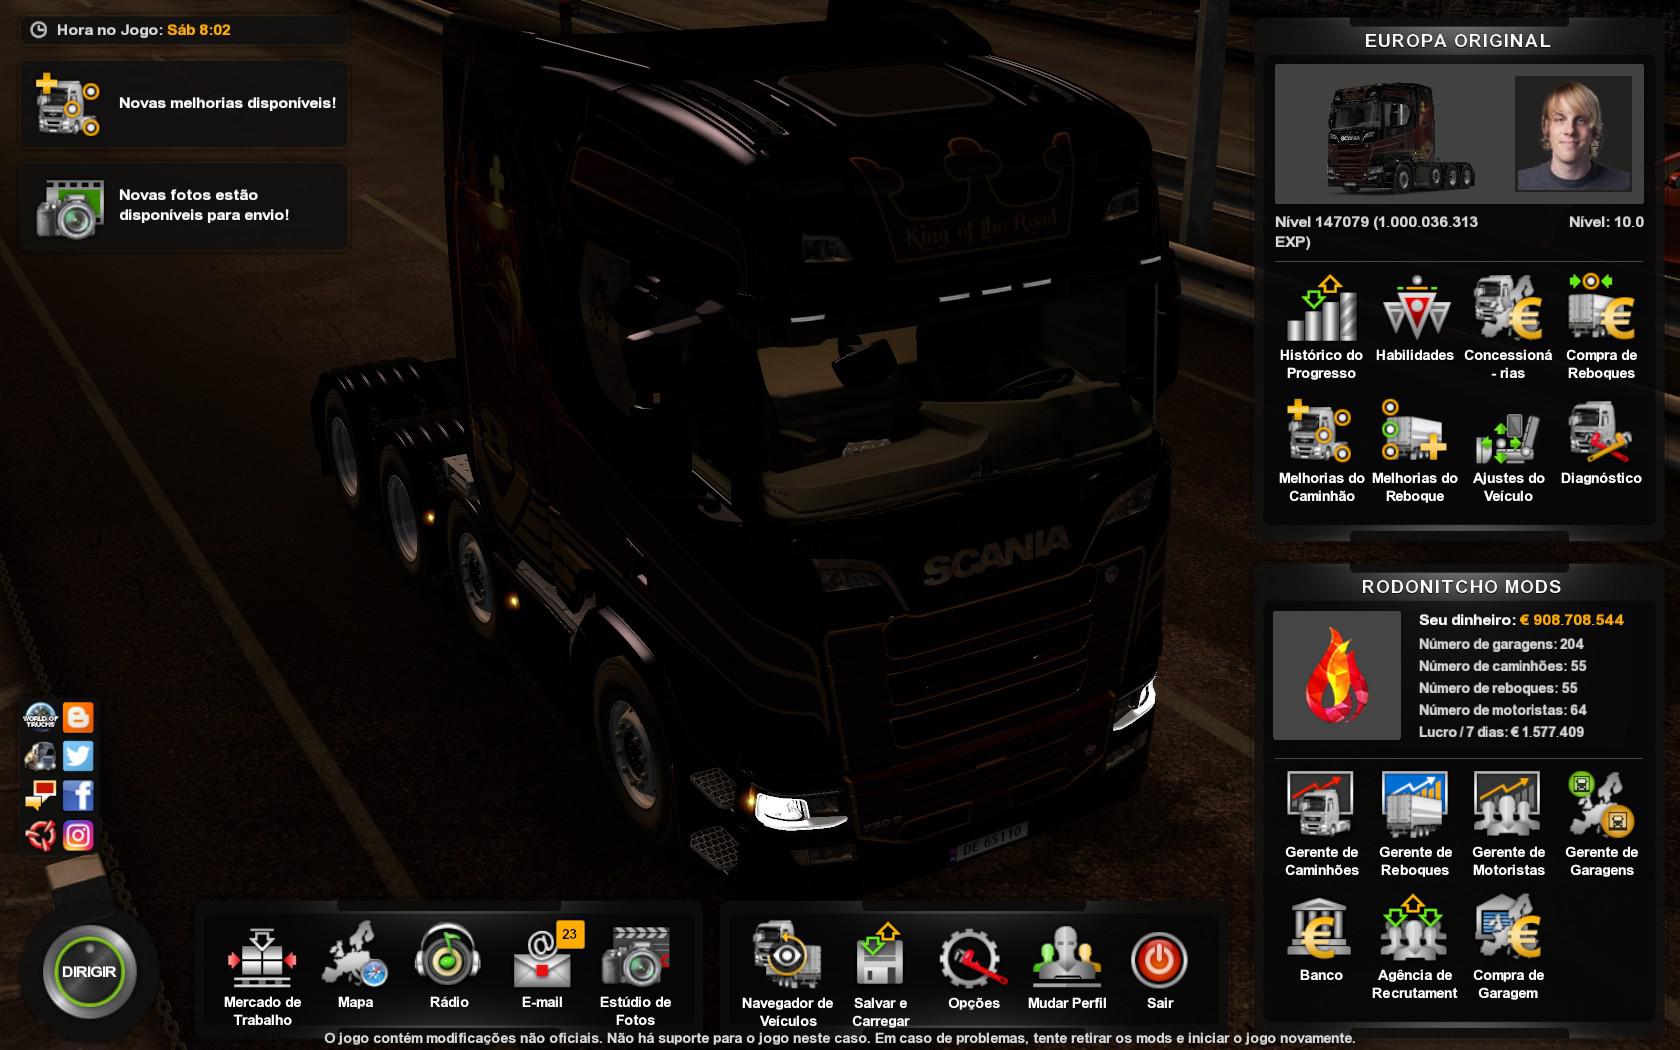 скачать мод на много денег на игру euro truck simulator 2 фото 79